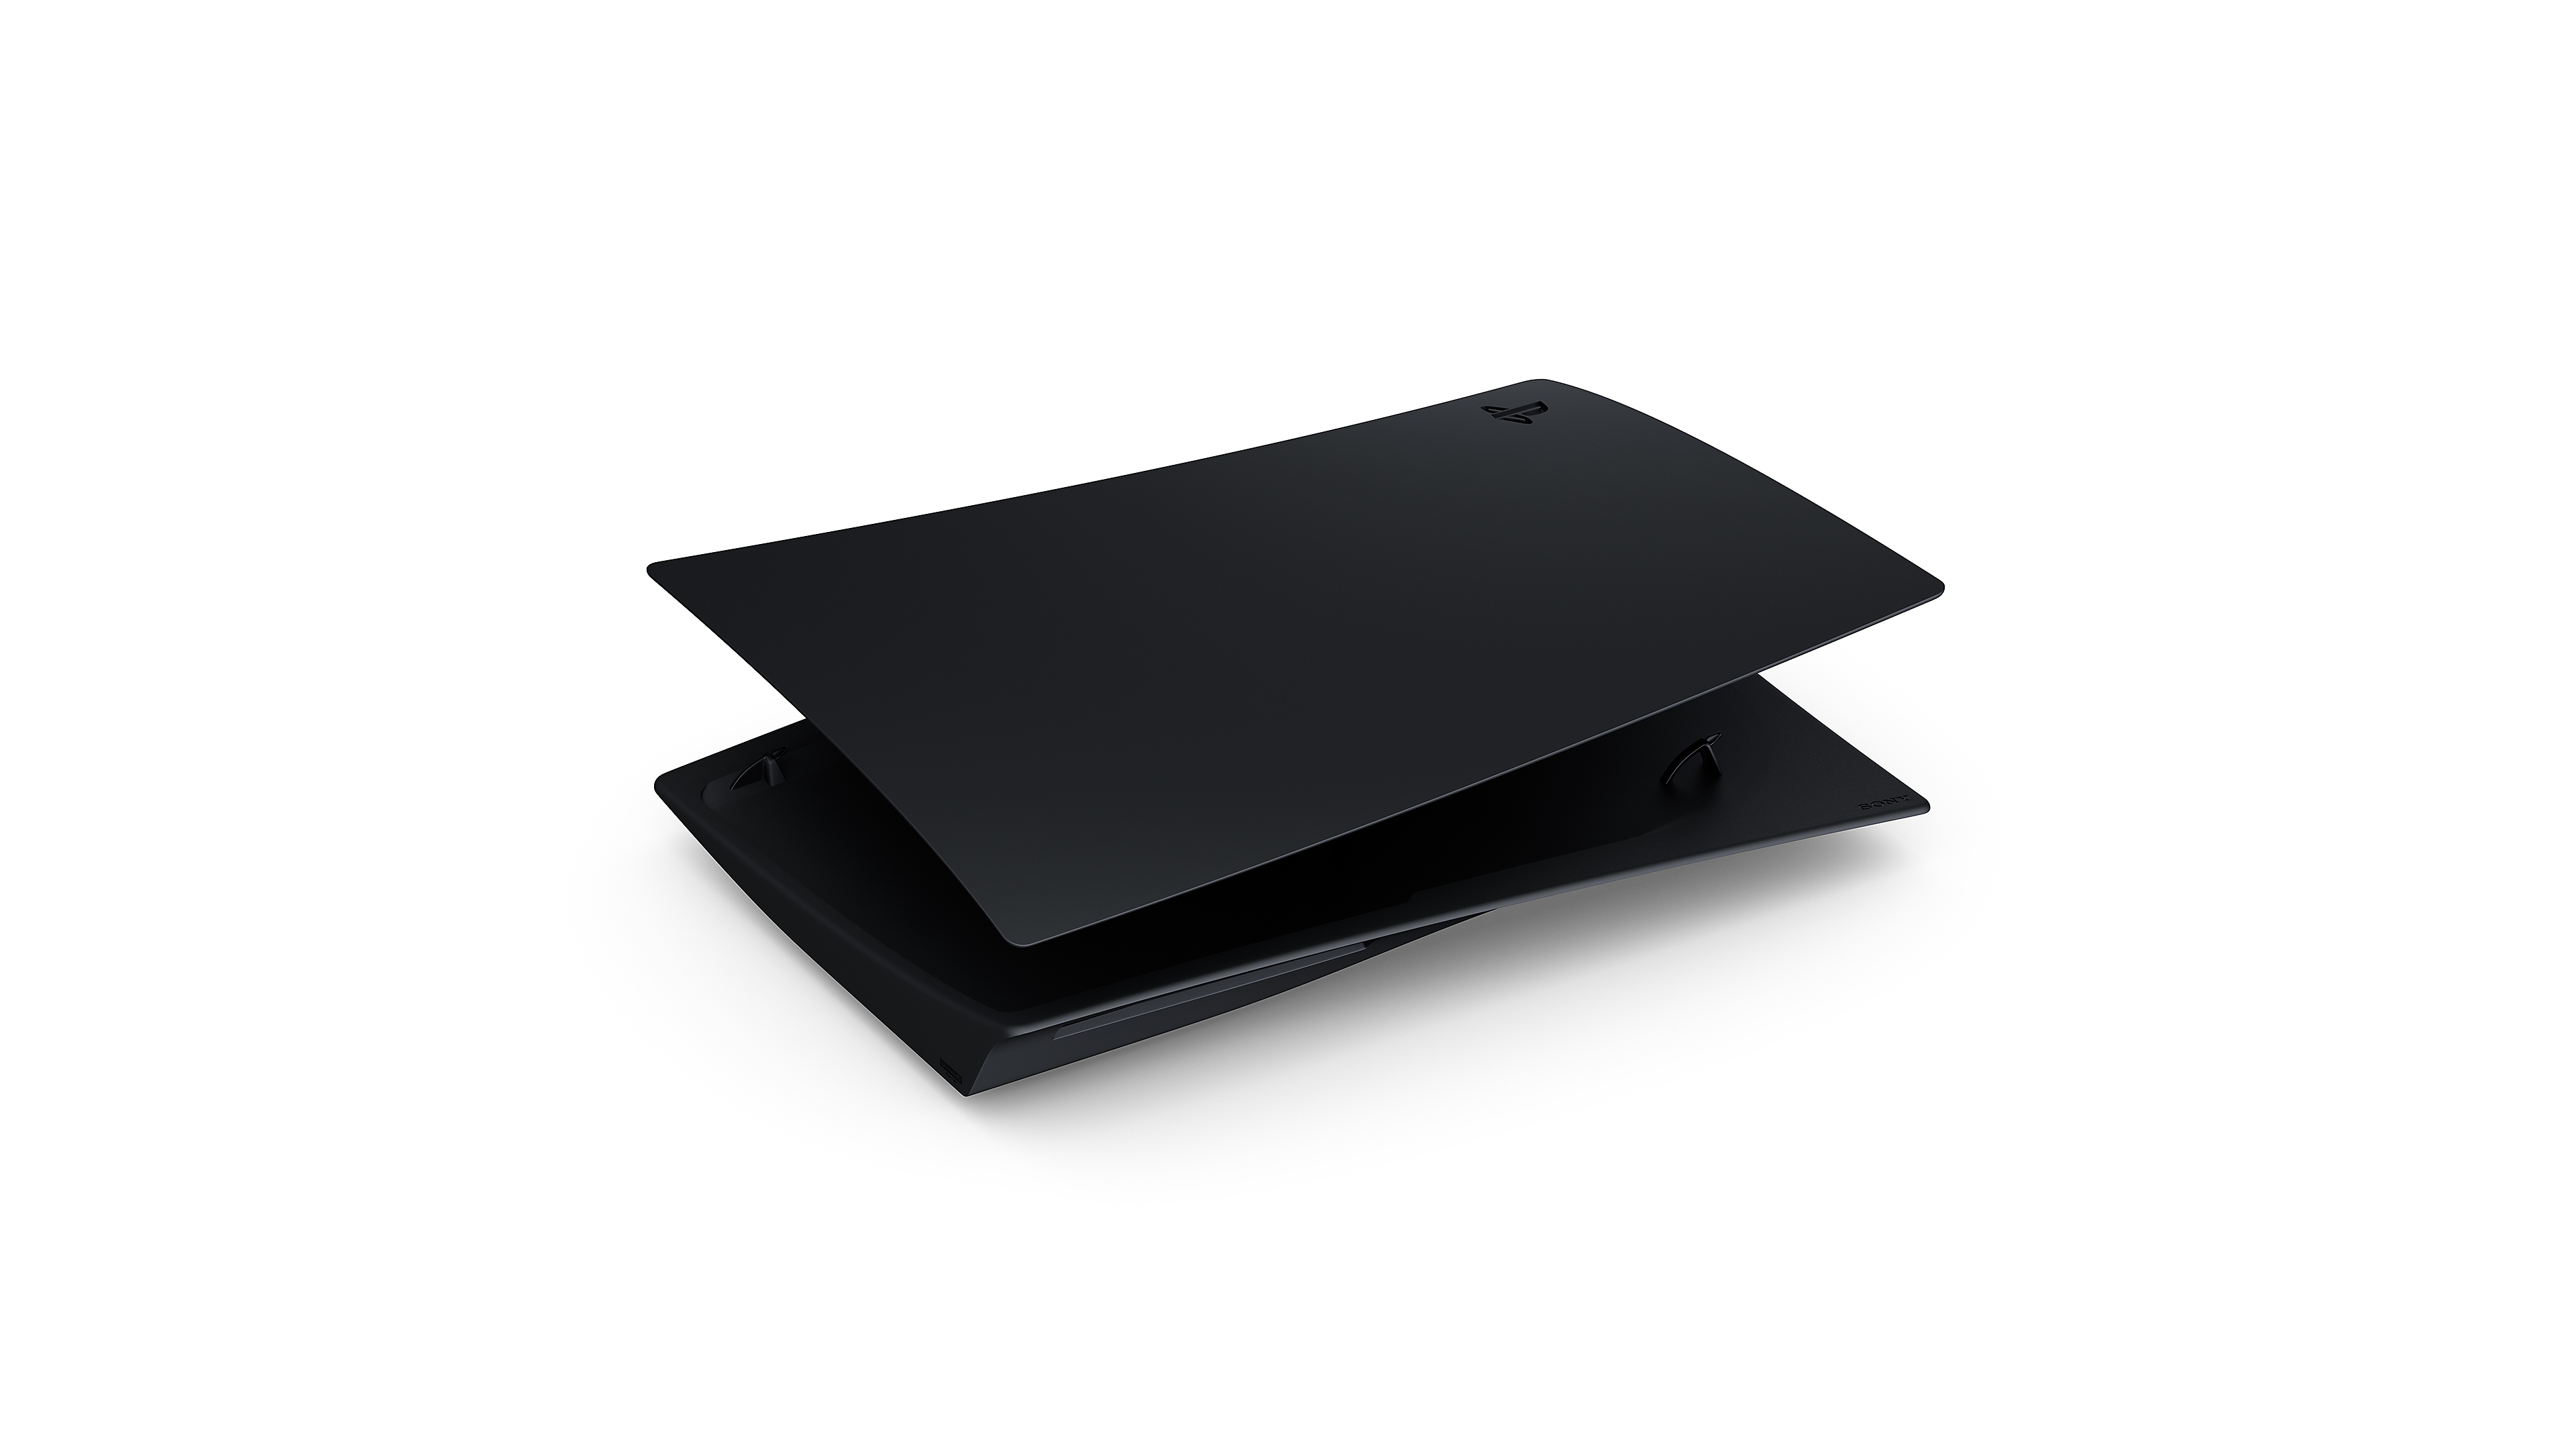 PS5 black console cover